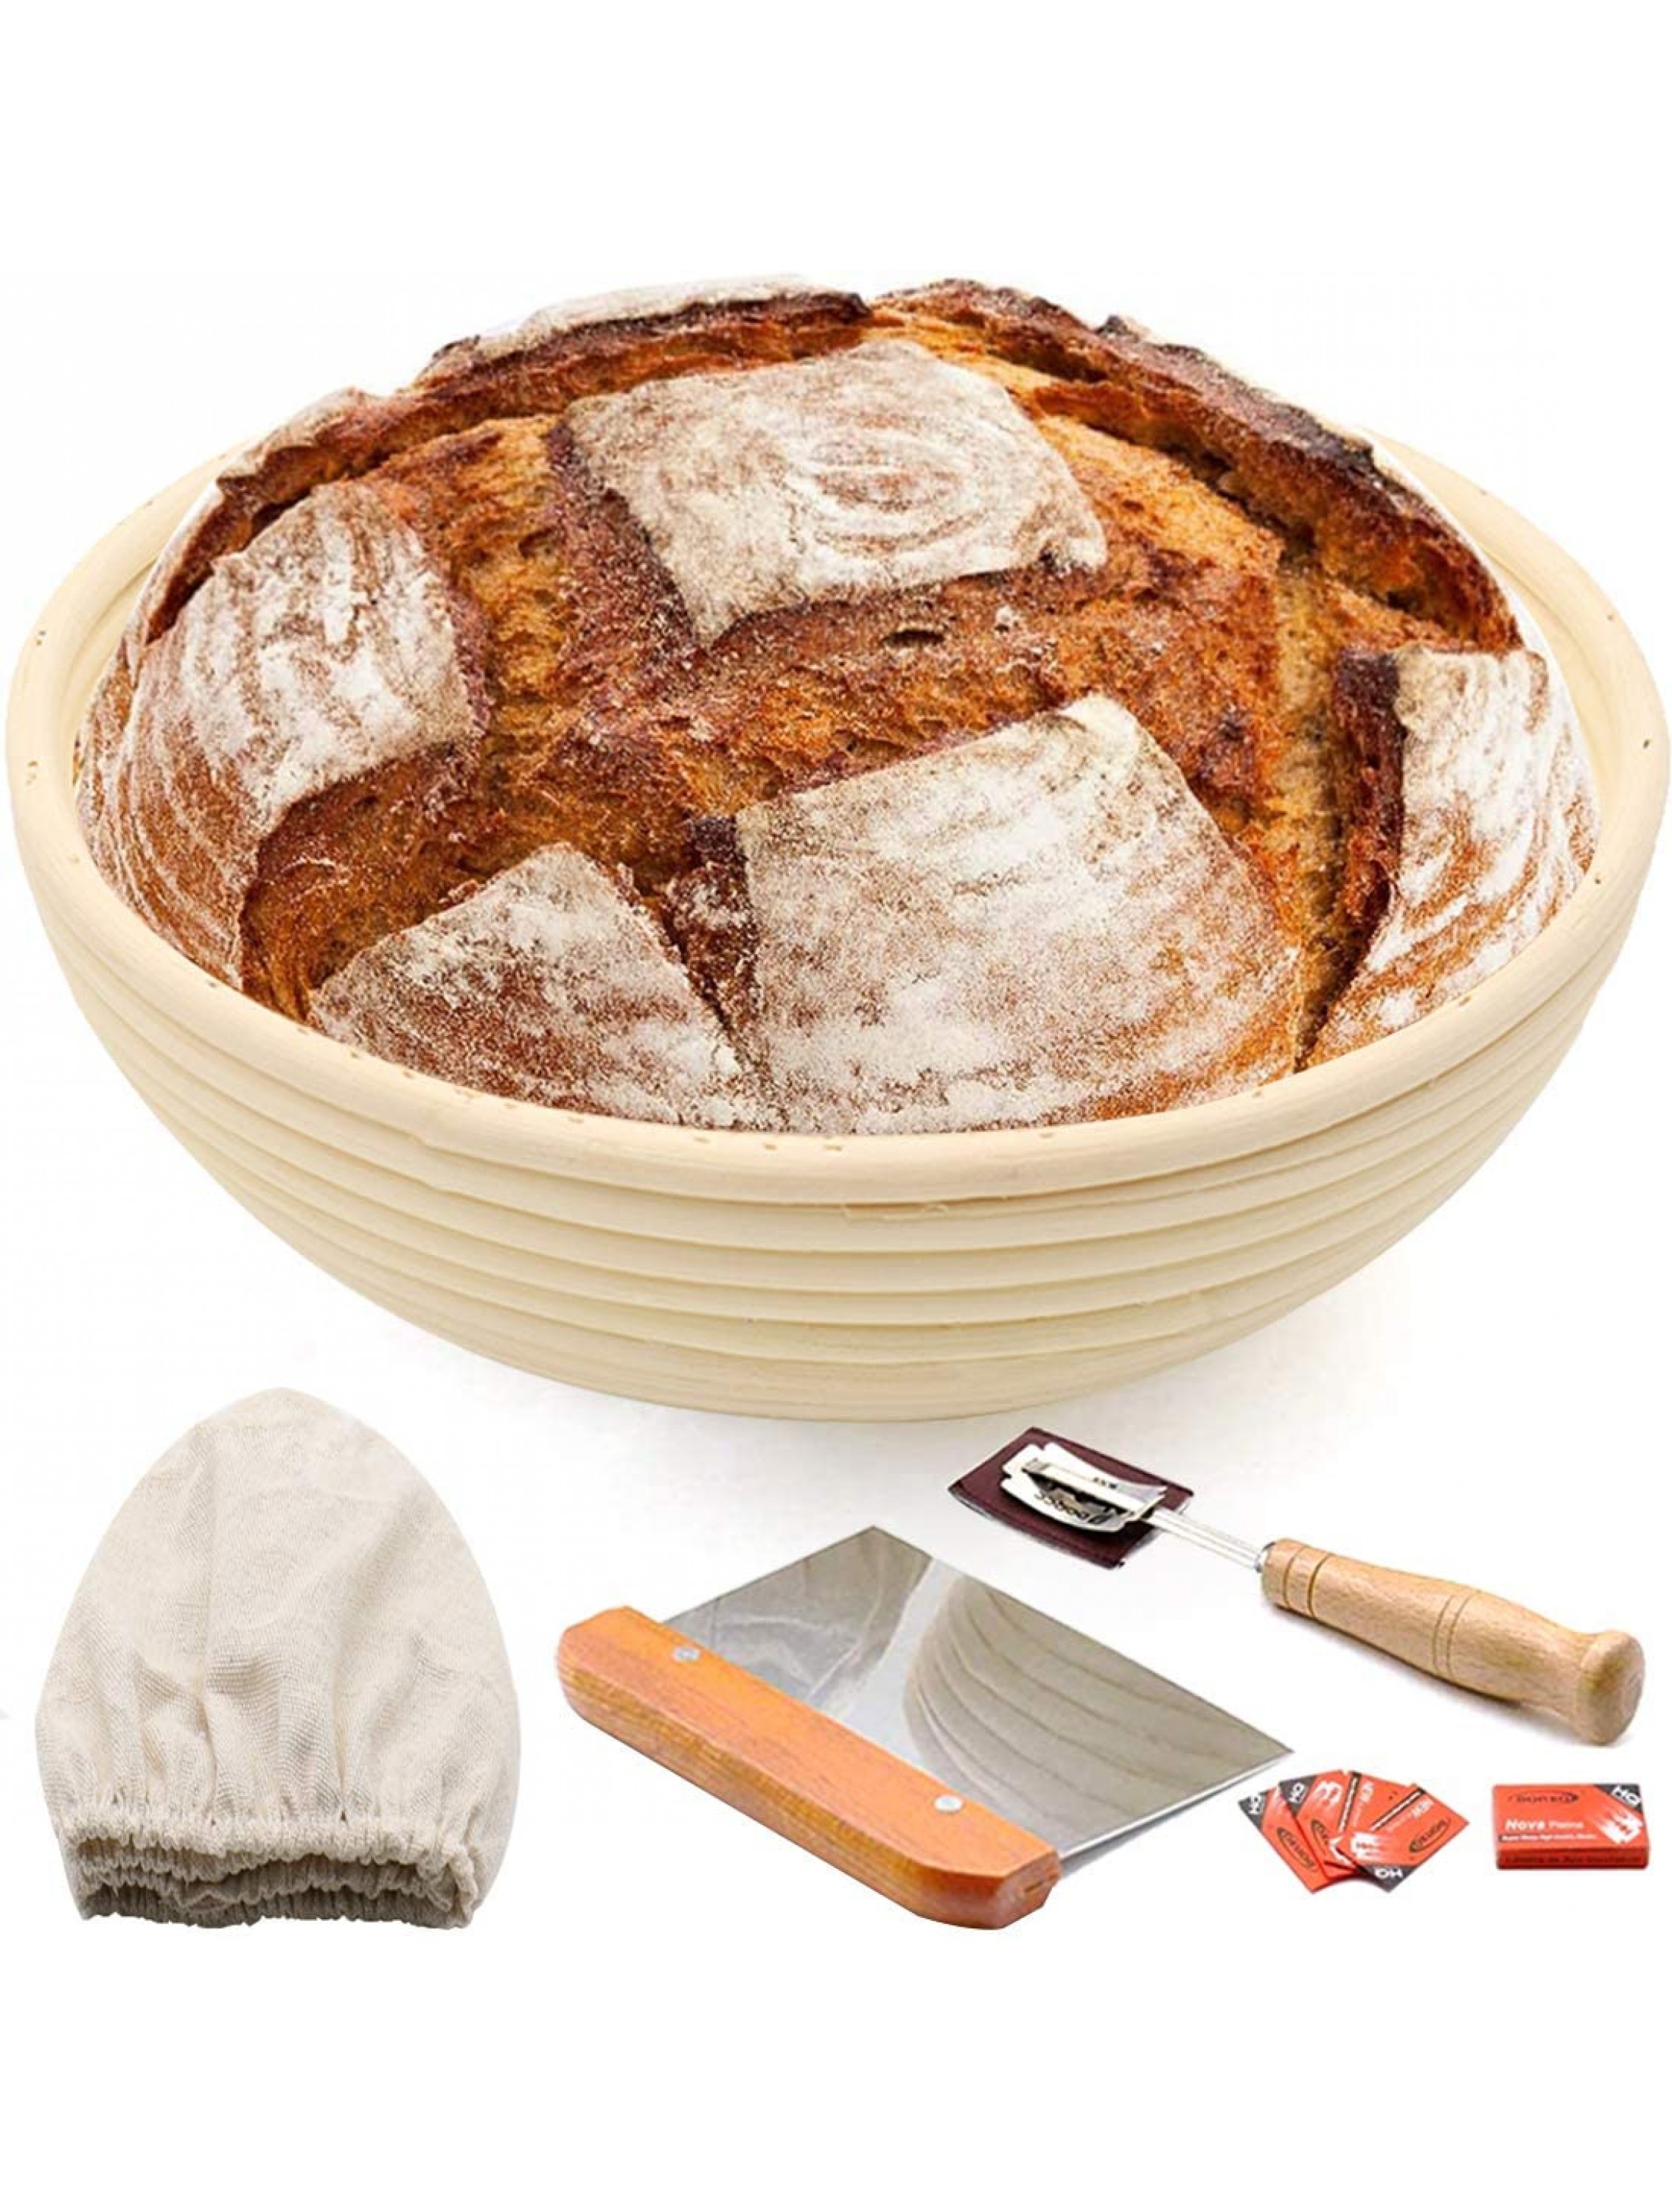 10 Round Bread Banneton Proofing Basket for Sourdough Rising Dough Baking Bowl Kit Gifts for Artisan Bread Making Starter Includes Linen Liner Metal Dough Scraper Scoring Lame & Case 5 Blades - B6PMKLZFX